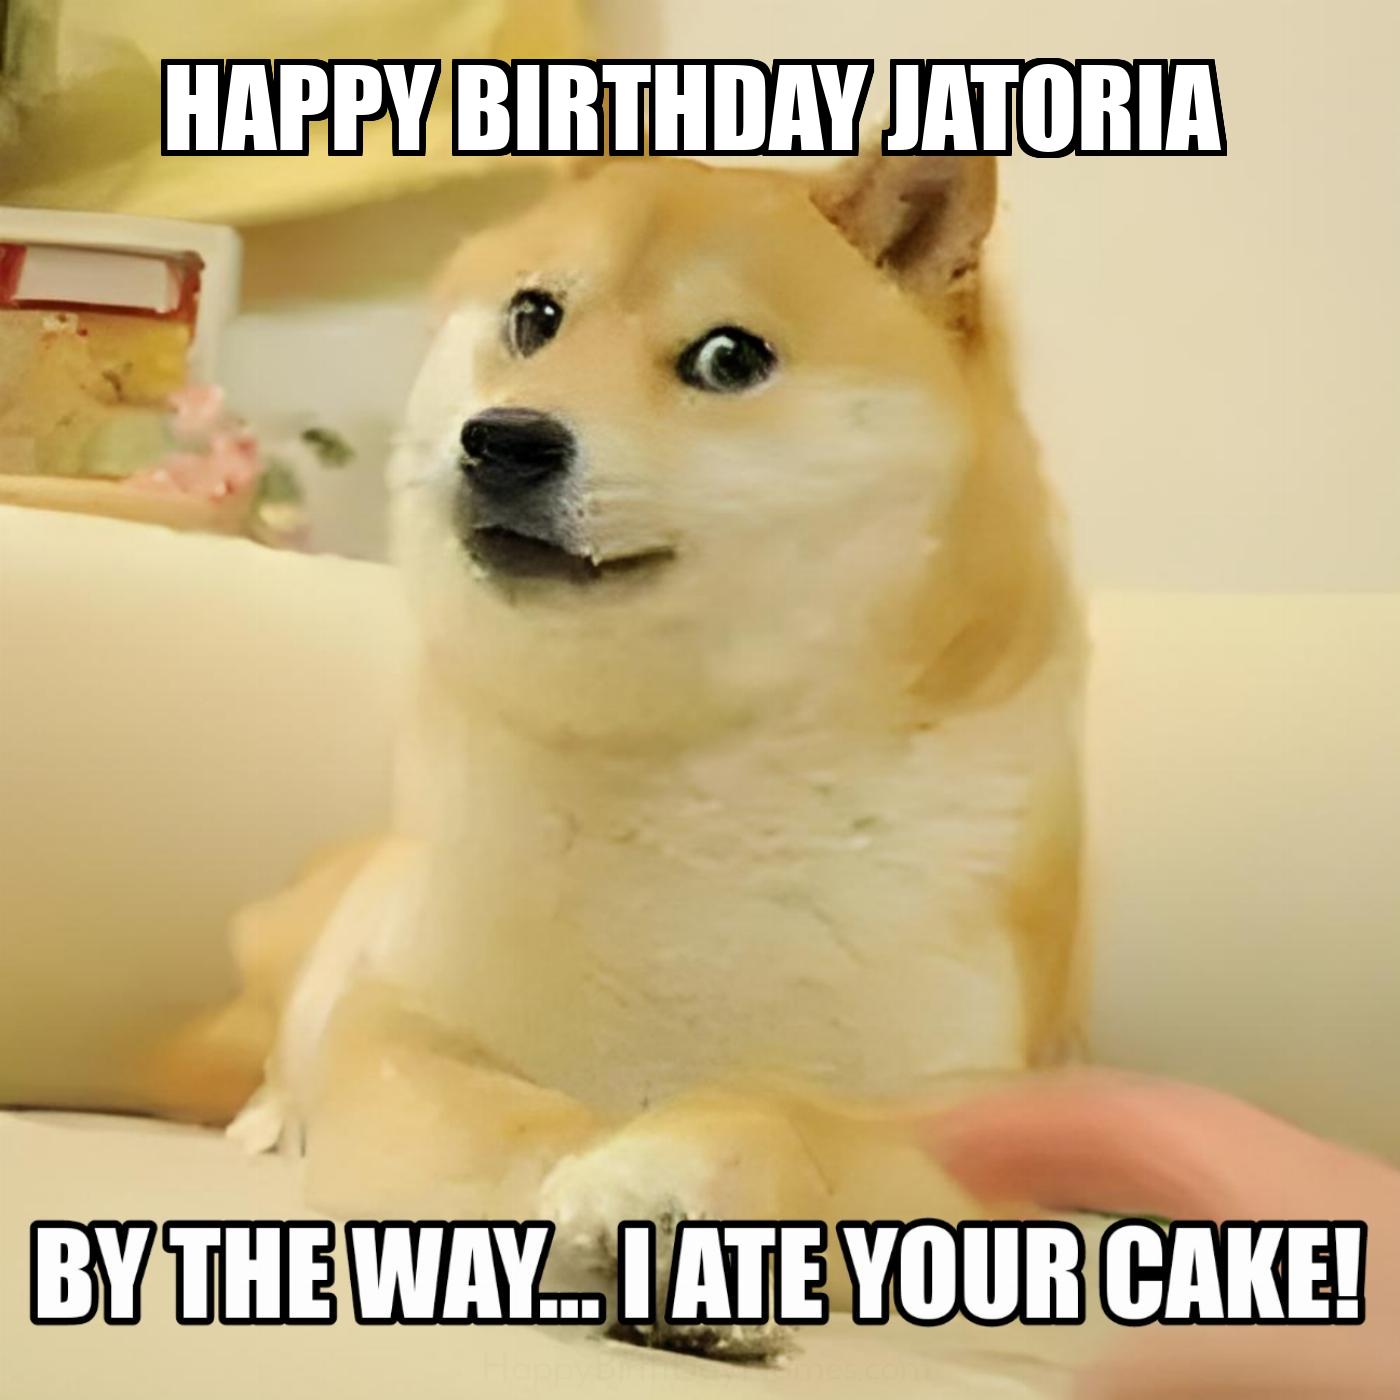 Happy Birthday Jatoria BTW I Ate Your Cake Meme